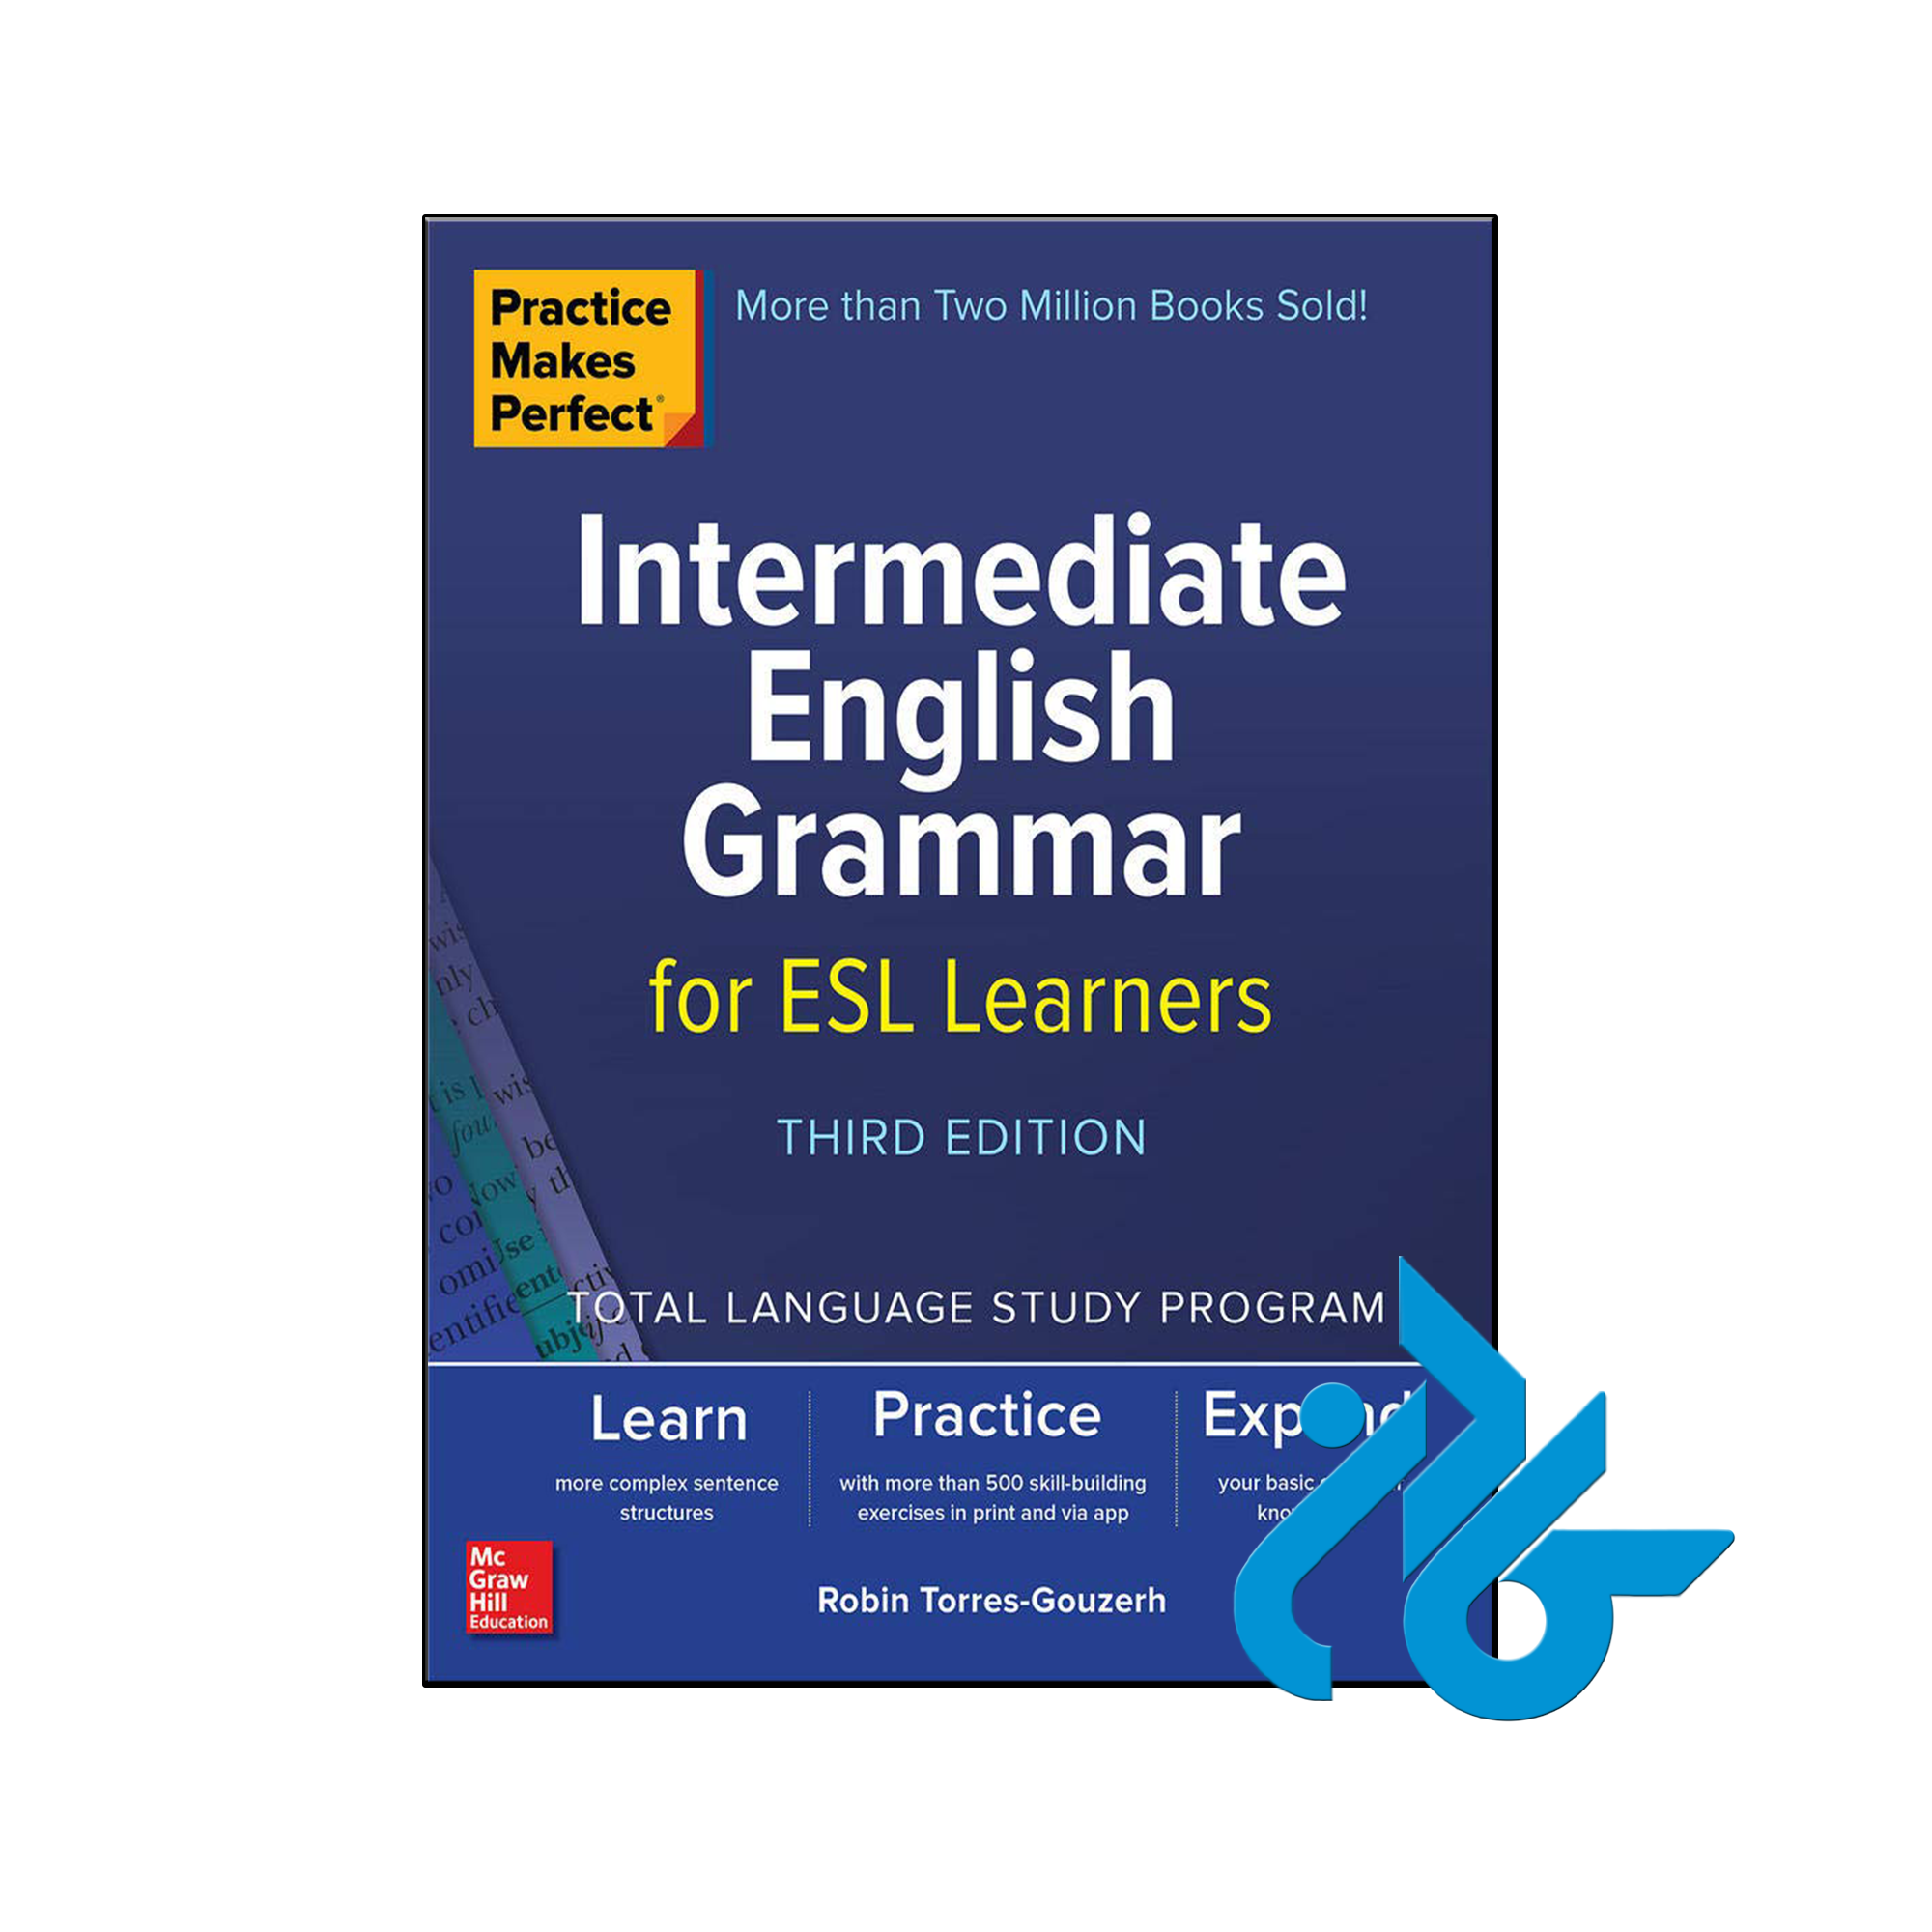 Learners　Makes　Grammar　فروشگاه　for　Perfect　خرید　English　Intermediate　قیمت　Practice　و　کتاب　از　ESL　3rd